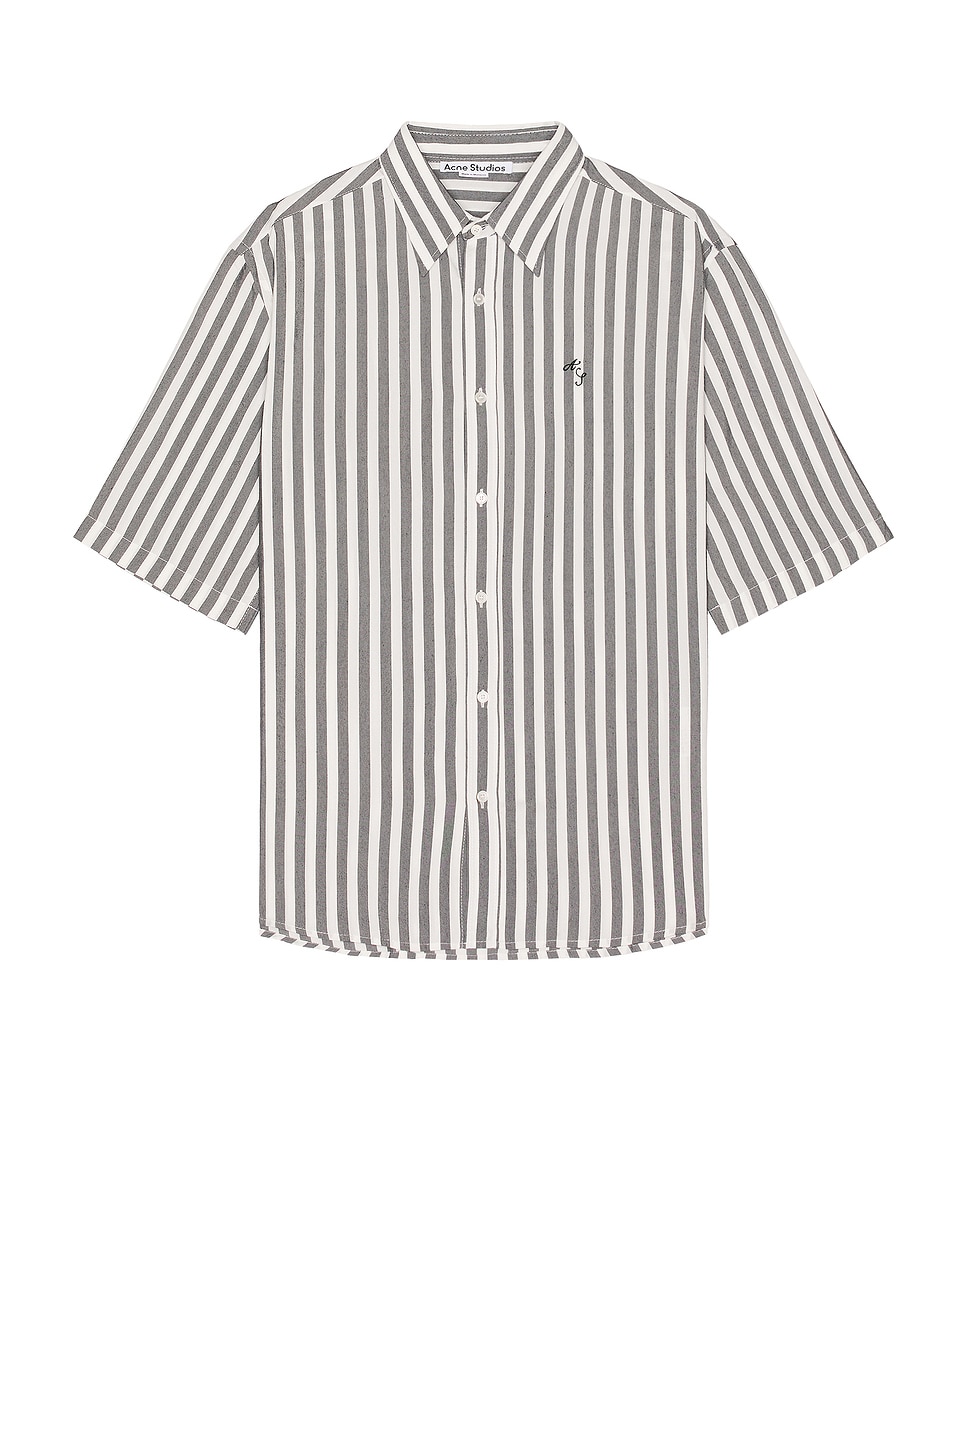 Image 1 of Acne Studios Short Sleeve Stripe Shirt in Black & White